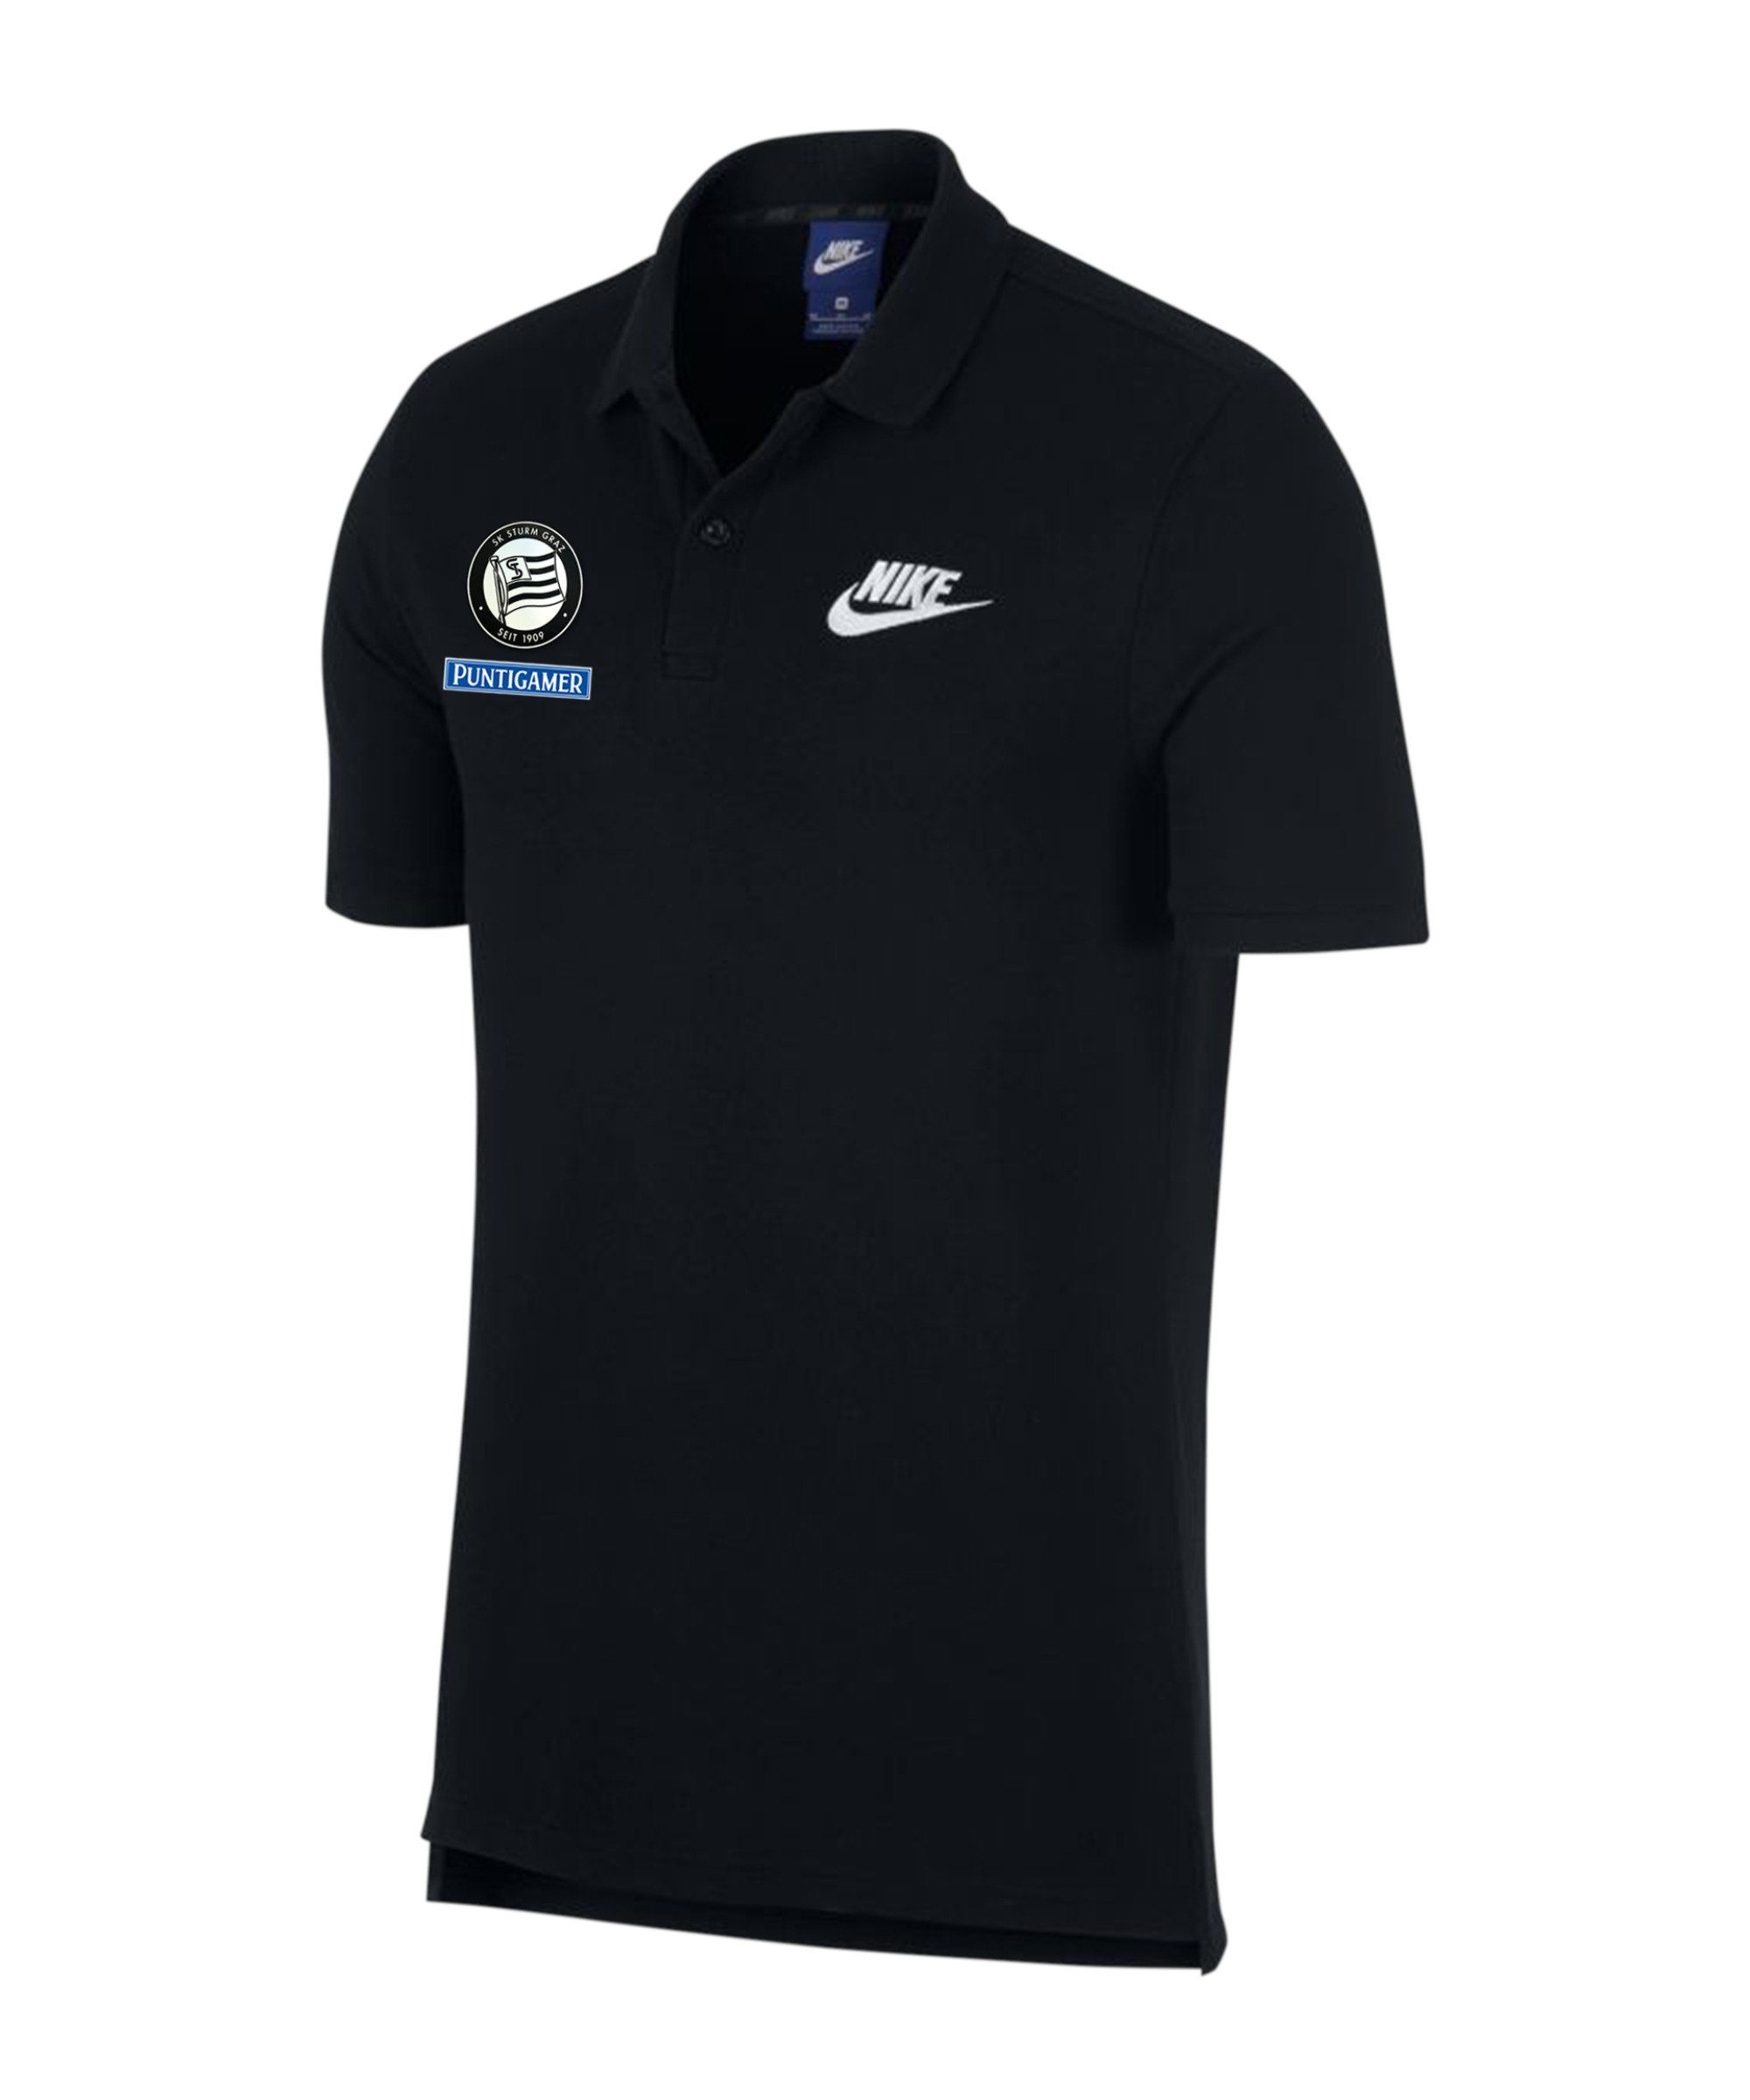 Nike Poloshirt Sturm Graz Poloshirt default | Poloshirts